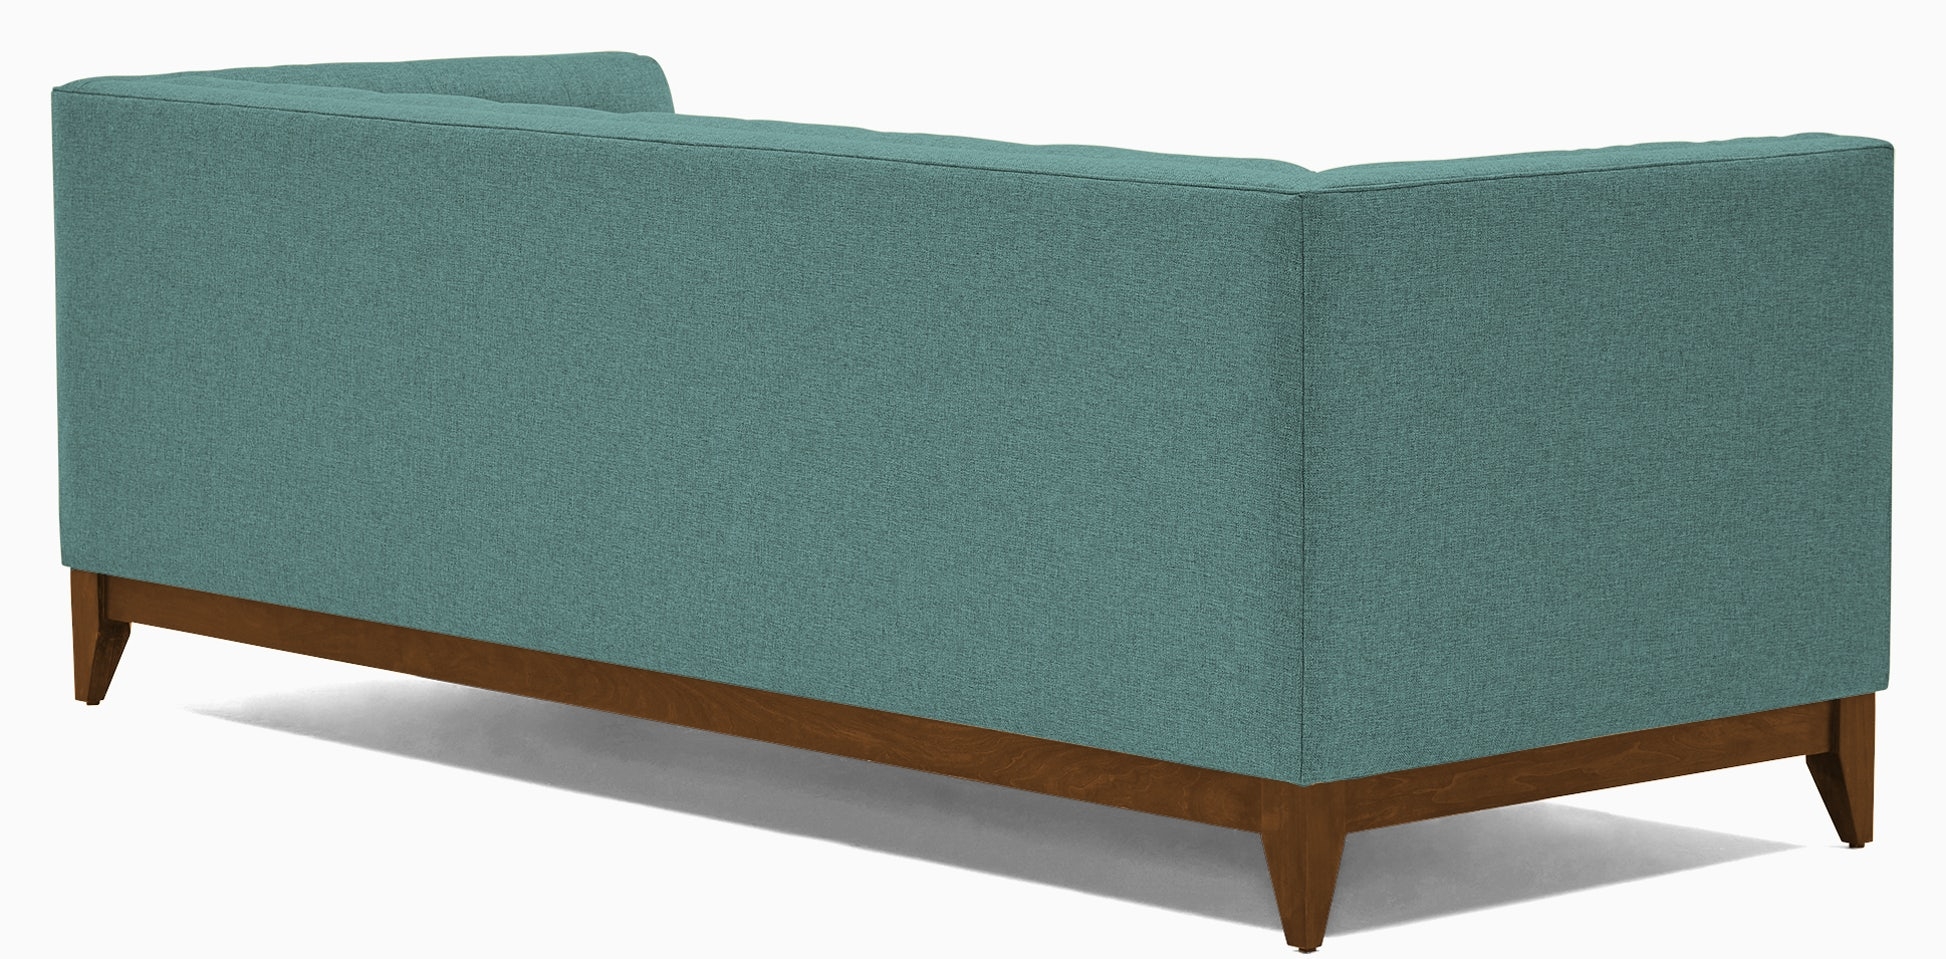 Stowe Sofa - Image 3